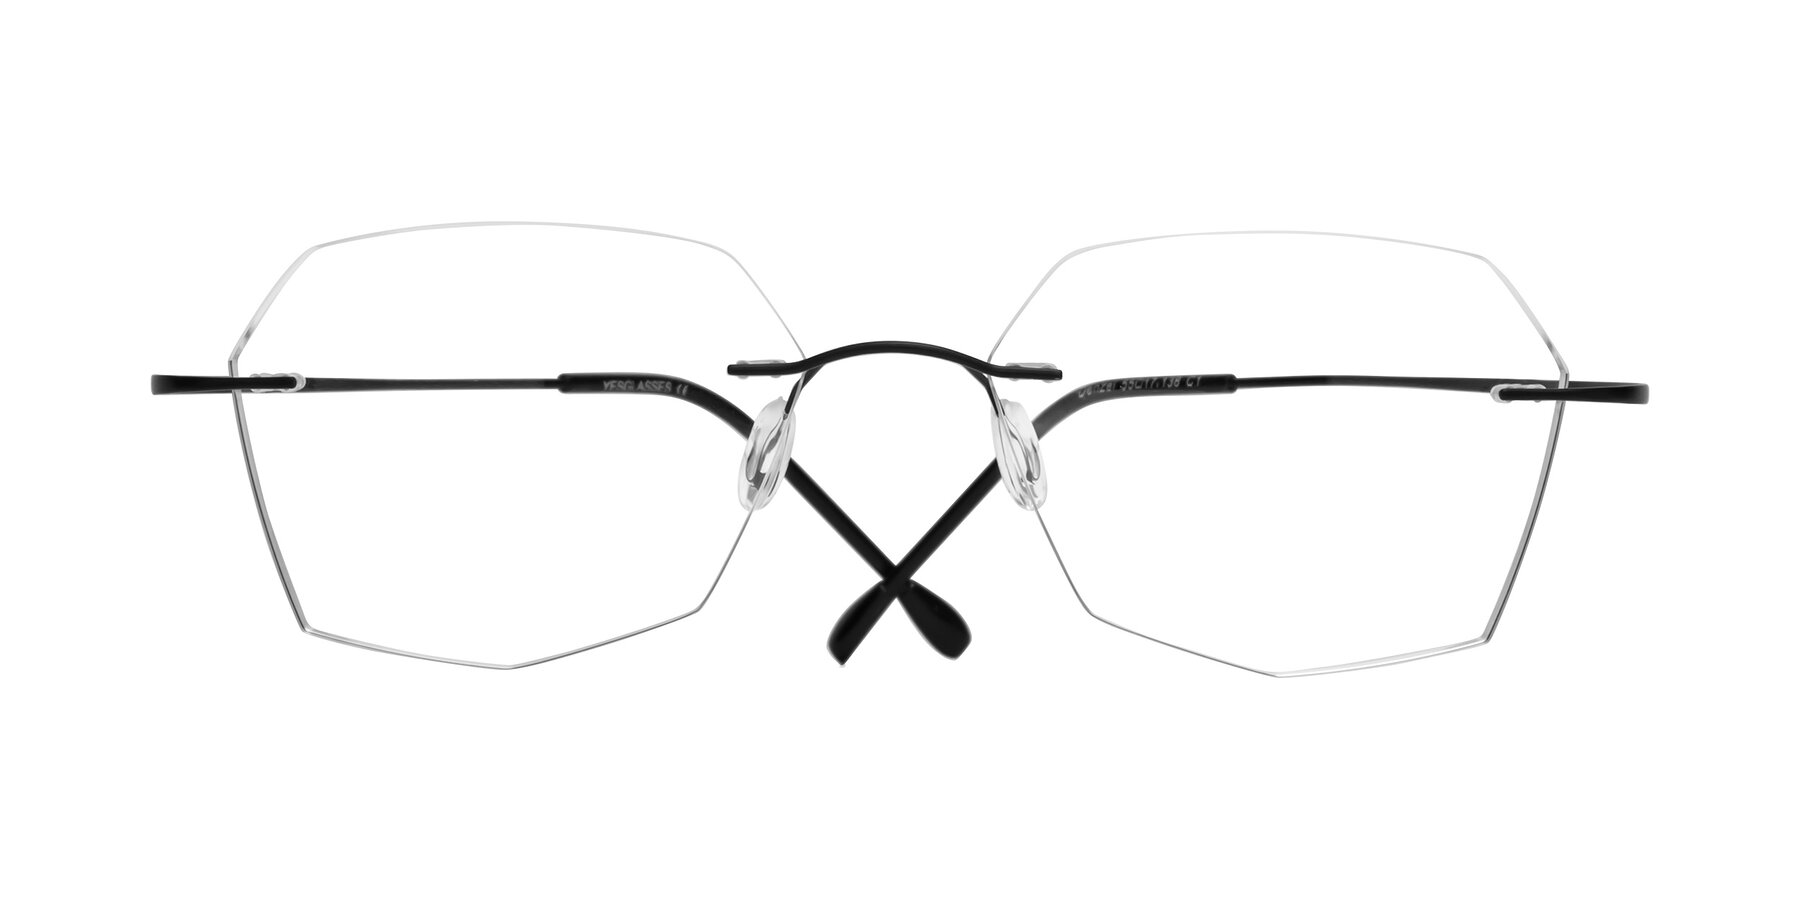 Denzel - Black Sunglasses Frame